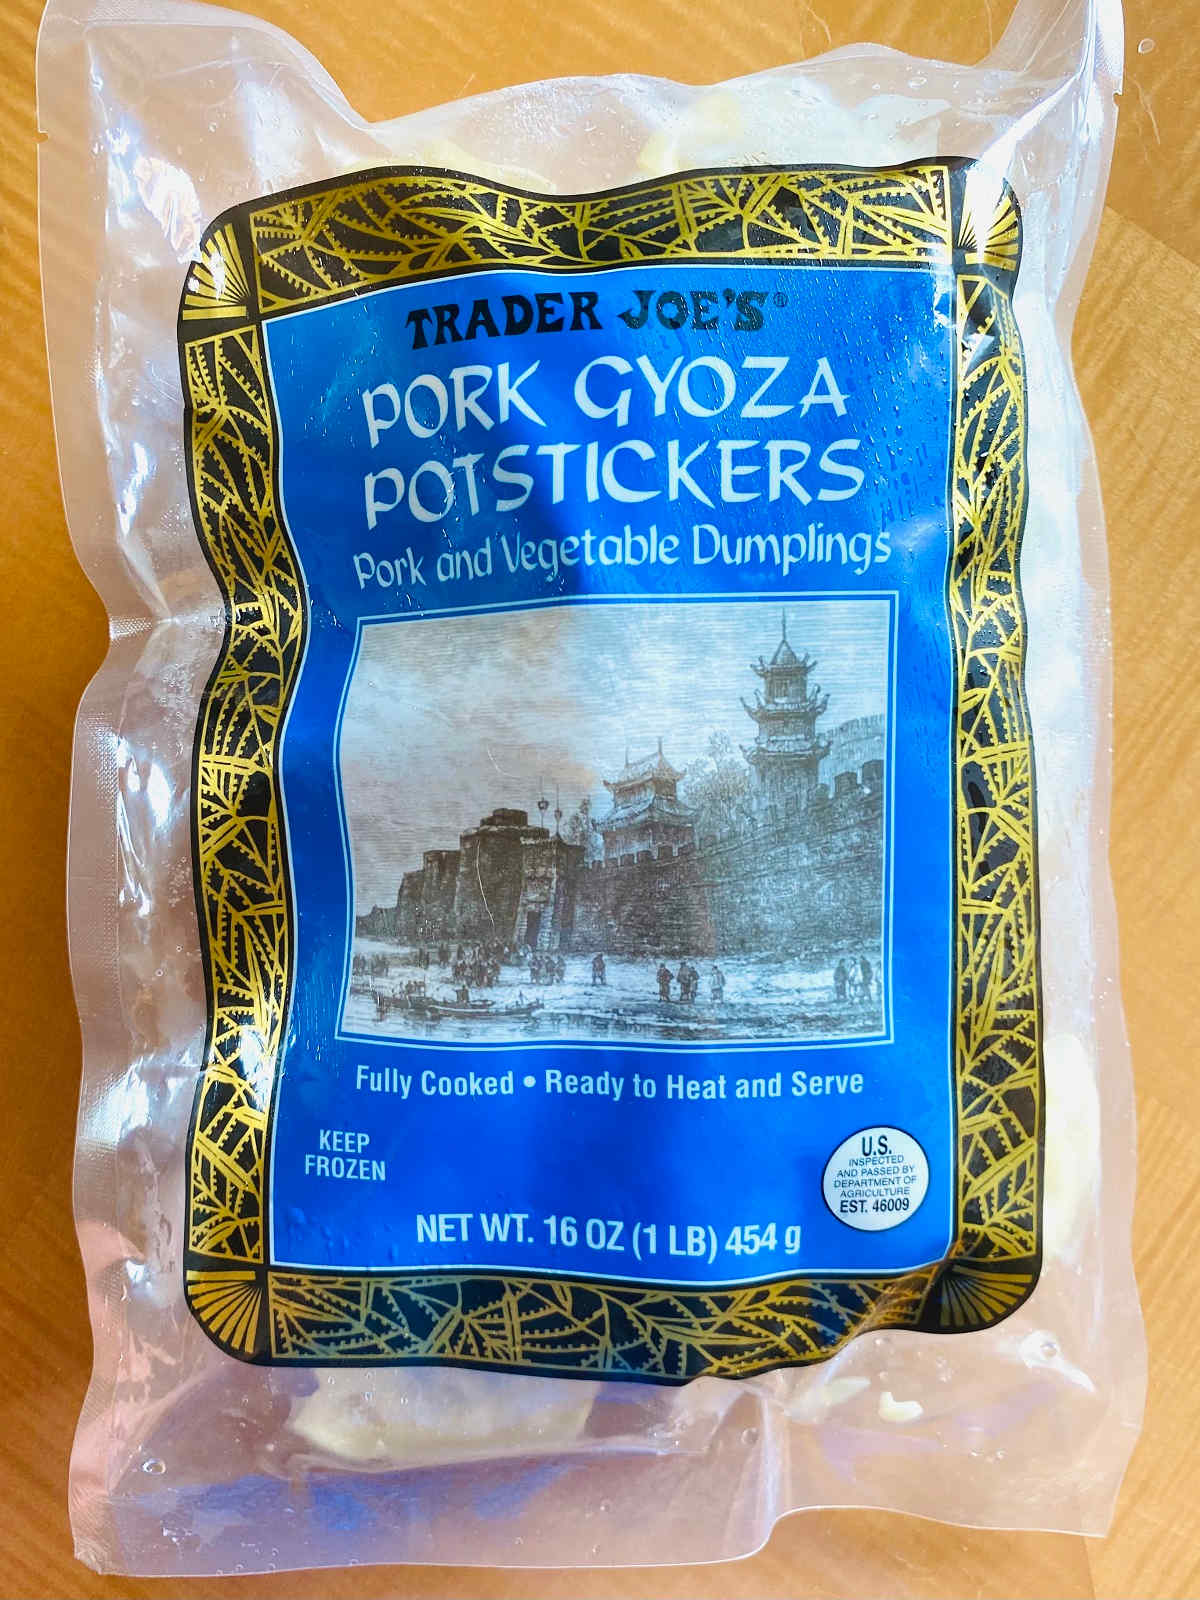 a bag of trader joe's pork gyoza potstickers